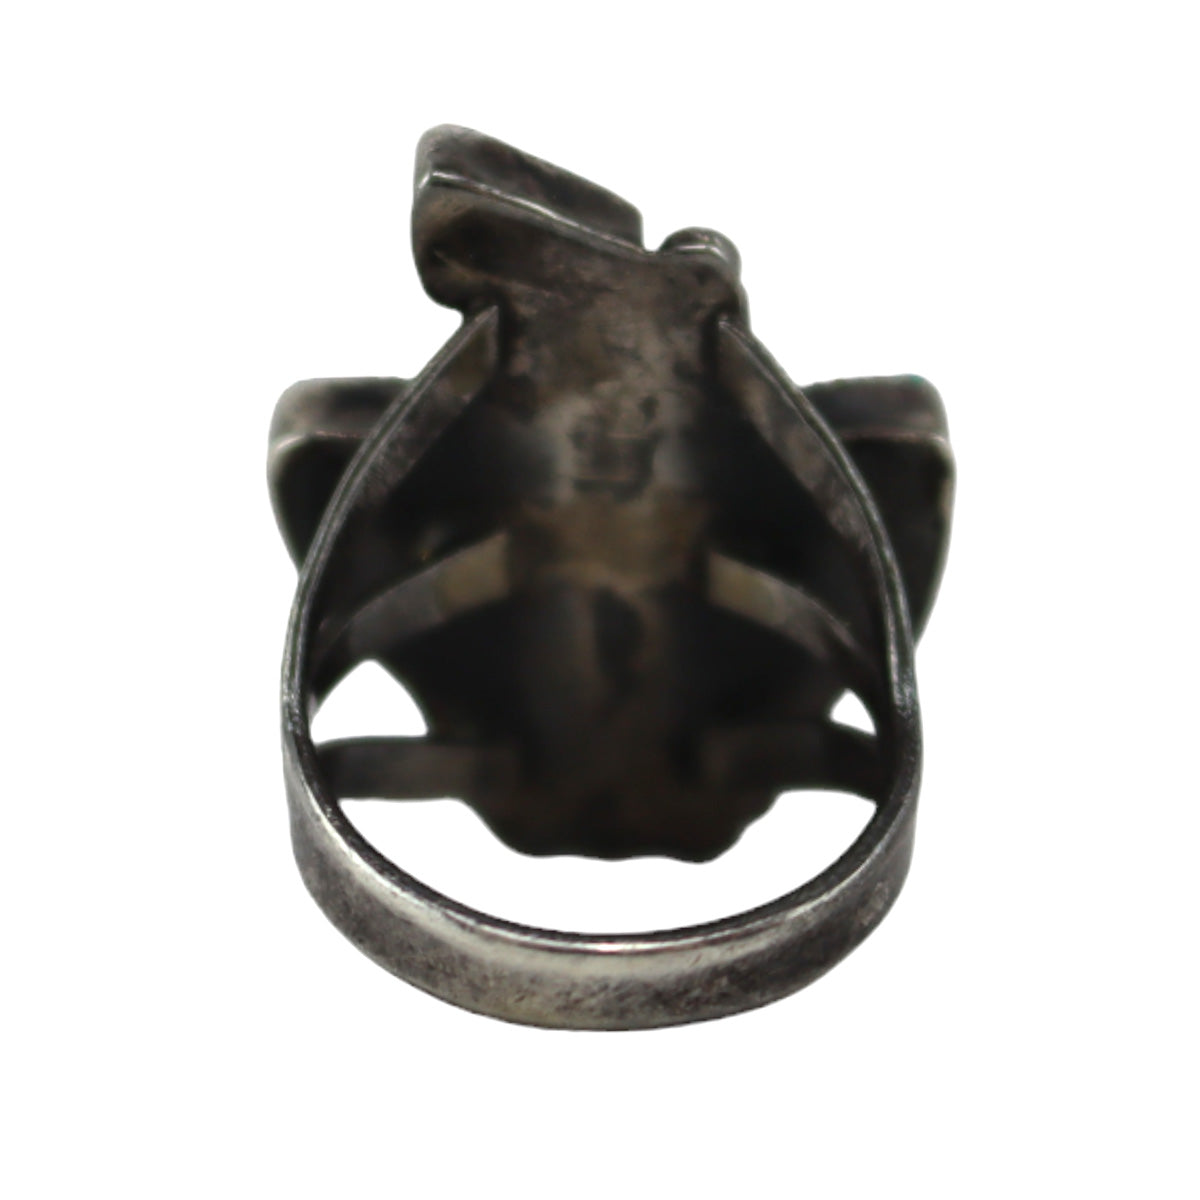 Zuni - Multi-Stone Inlay and Silver Thunderbird Ring c. 1940s, size 5 (J15990-009)